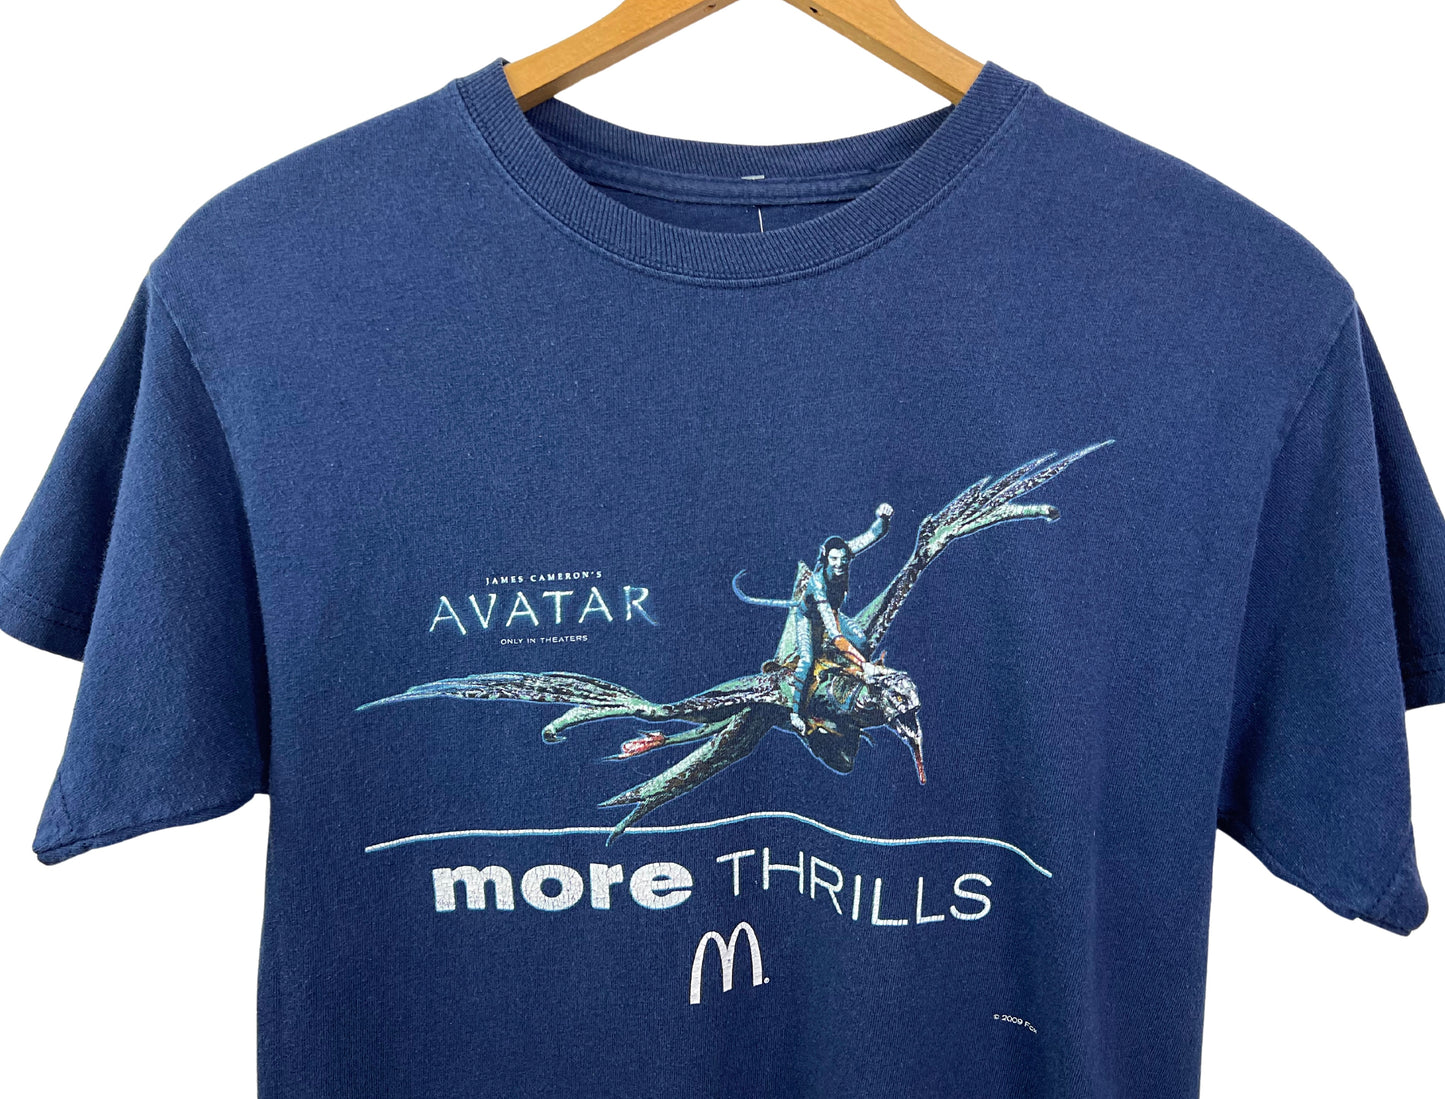 2009 Avatar x McDonalds More Thrills Promotional Movie Tshirt Size Small